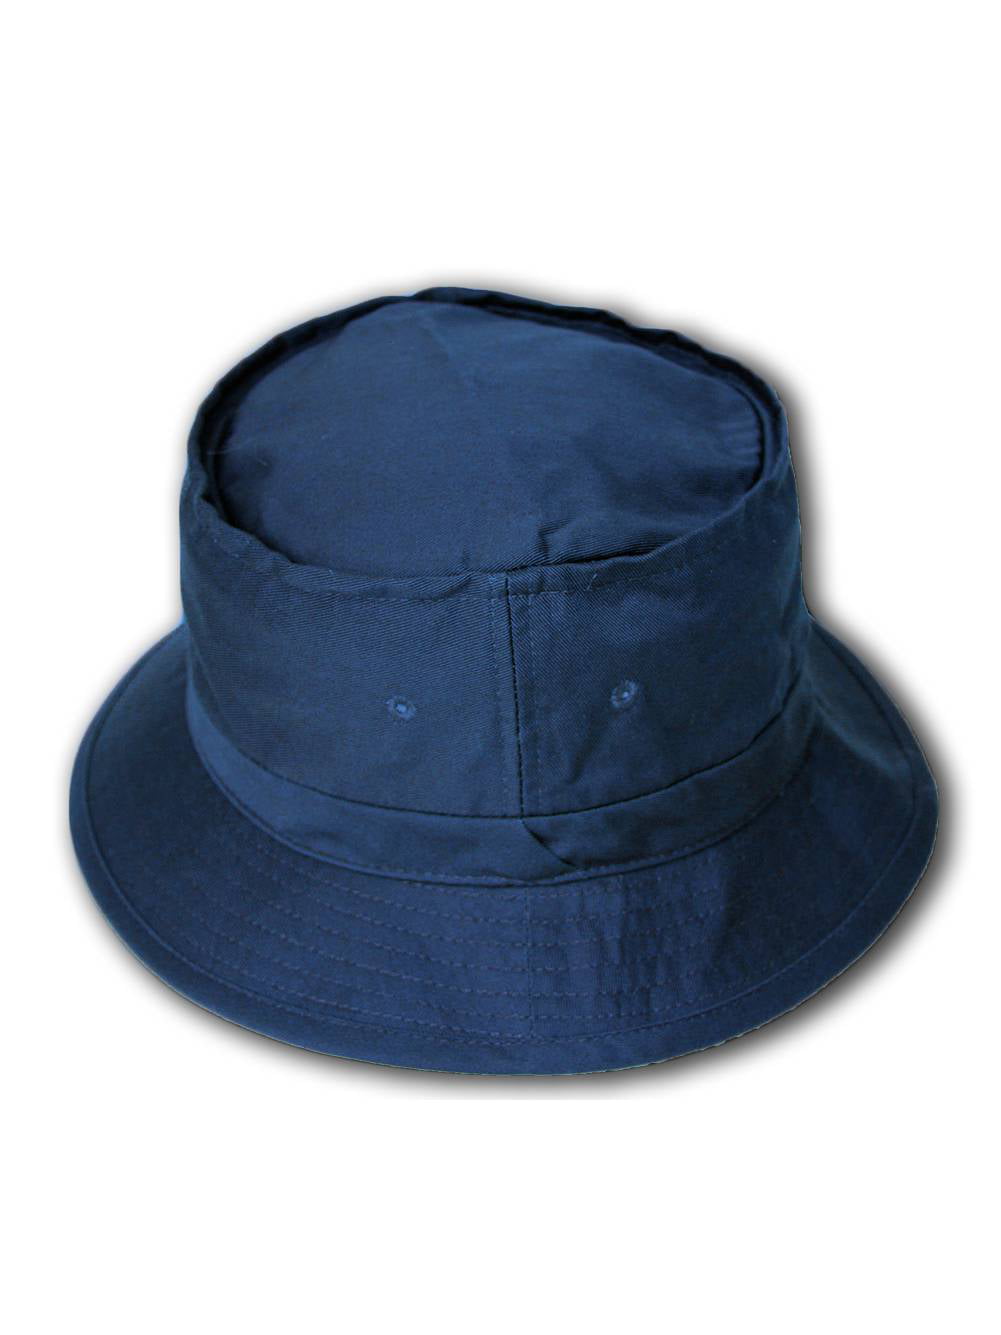 Popoye Unisex Flat Top Wide Brim Sun Visor Cap Funky Pure Color Outdoor Fishing Bucket Hat